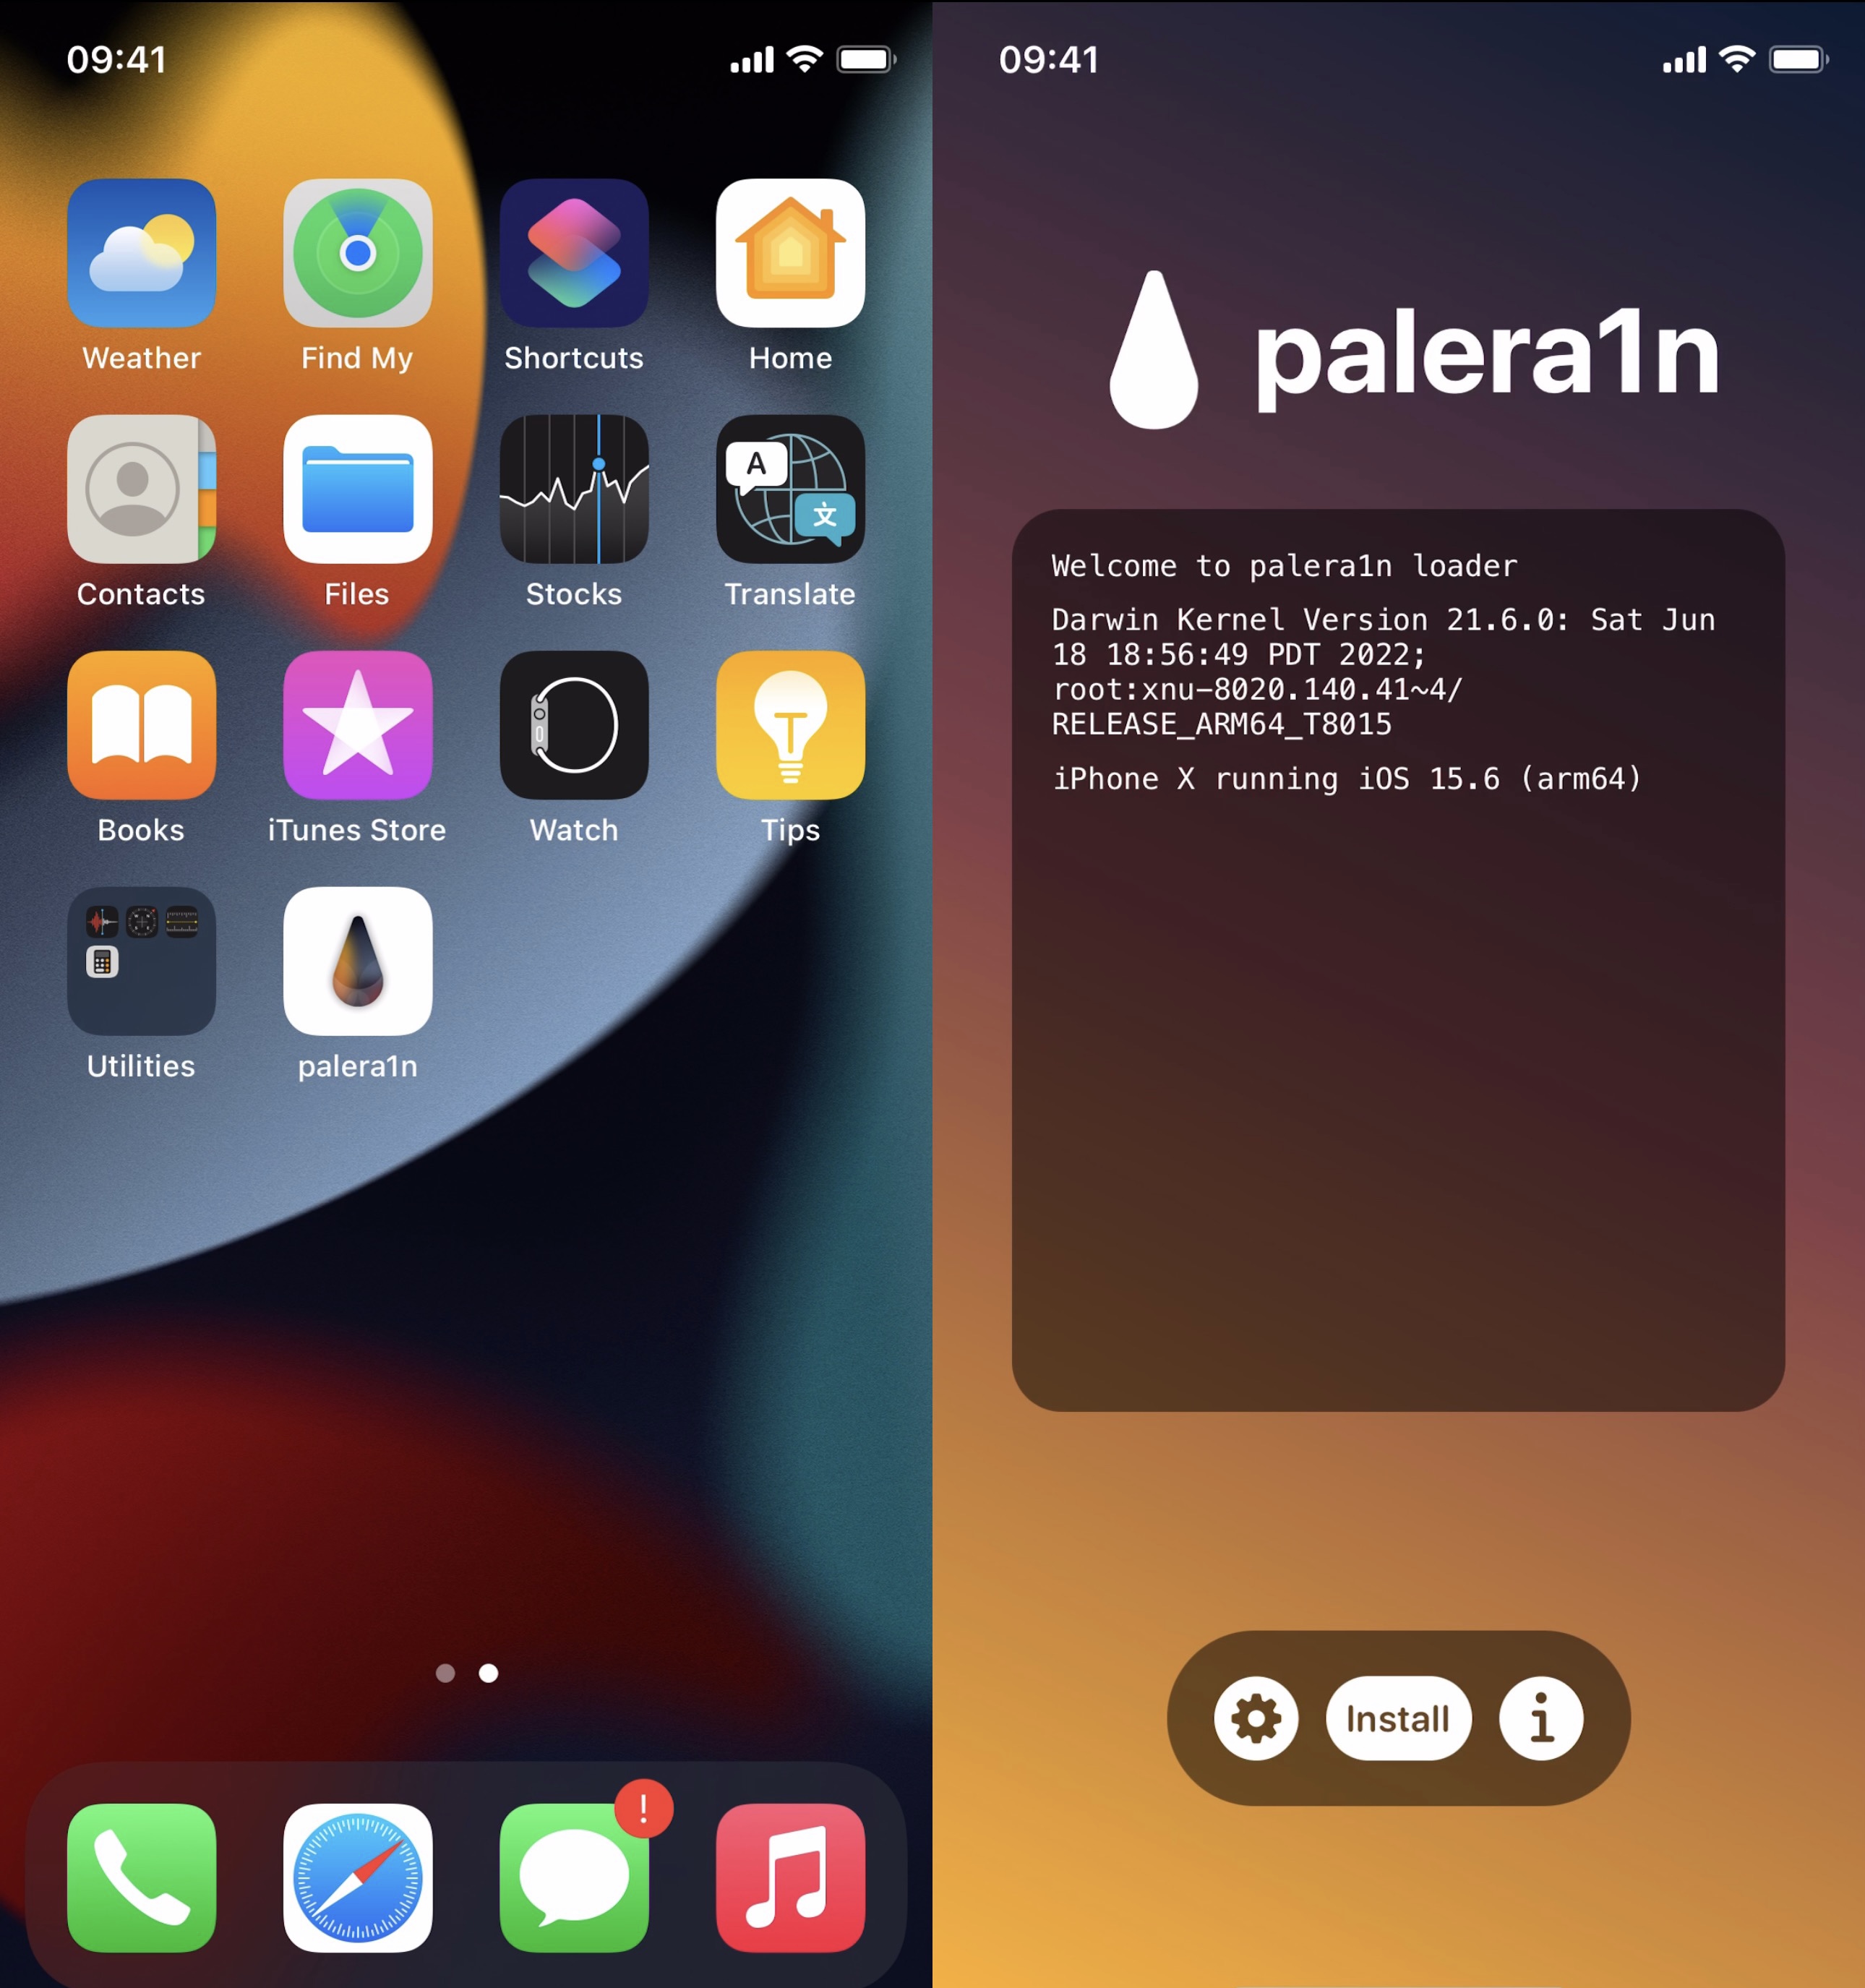 /img/iphone-x-jailbreak/Palera1n-loader-app.jpg